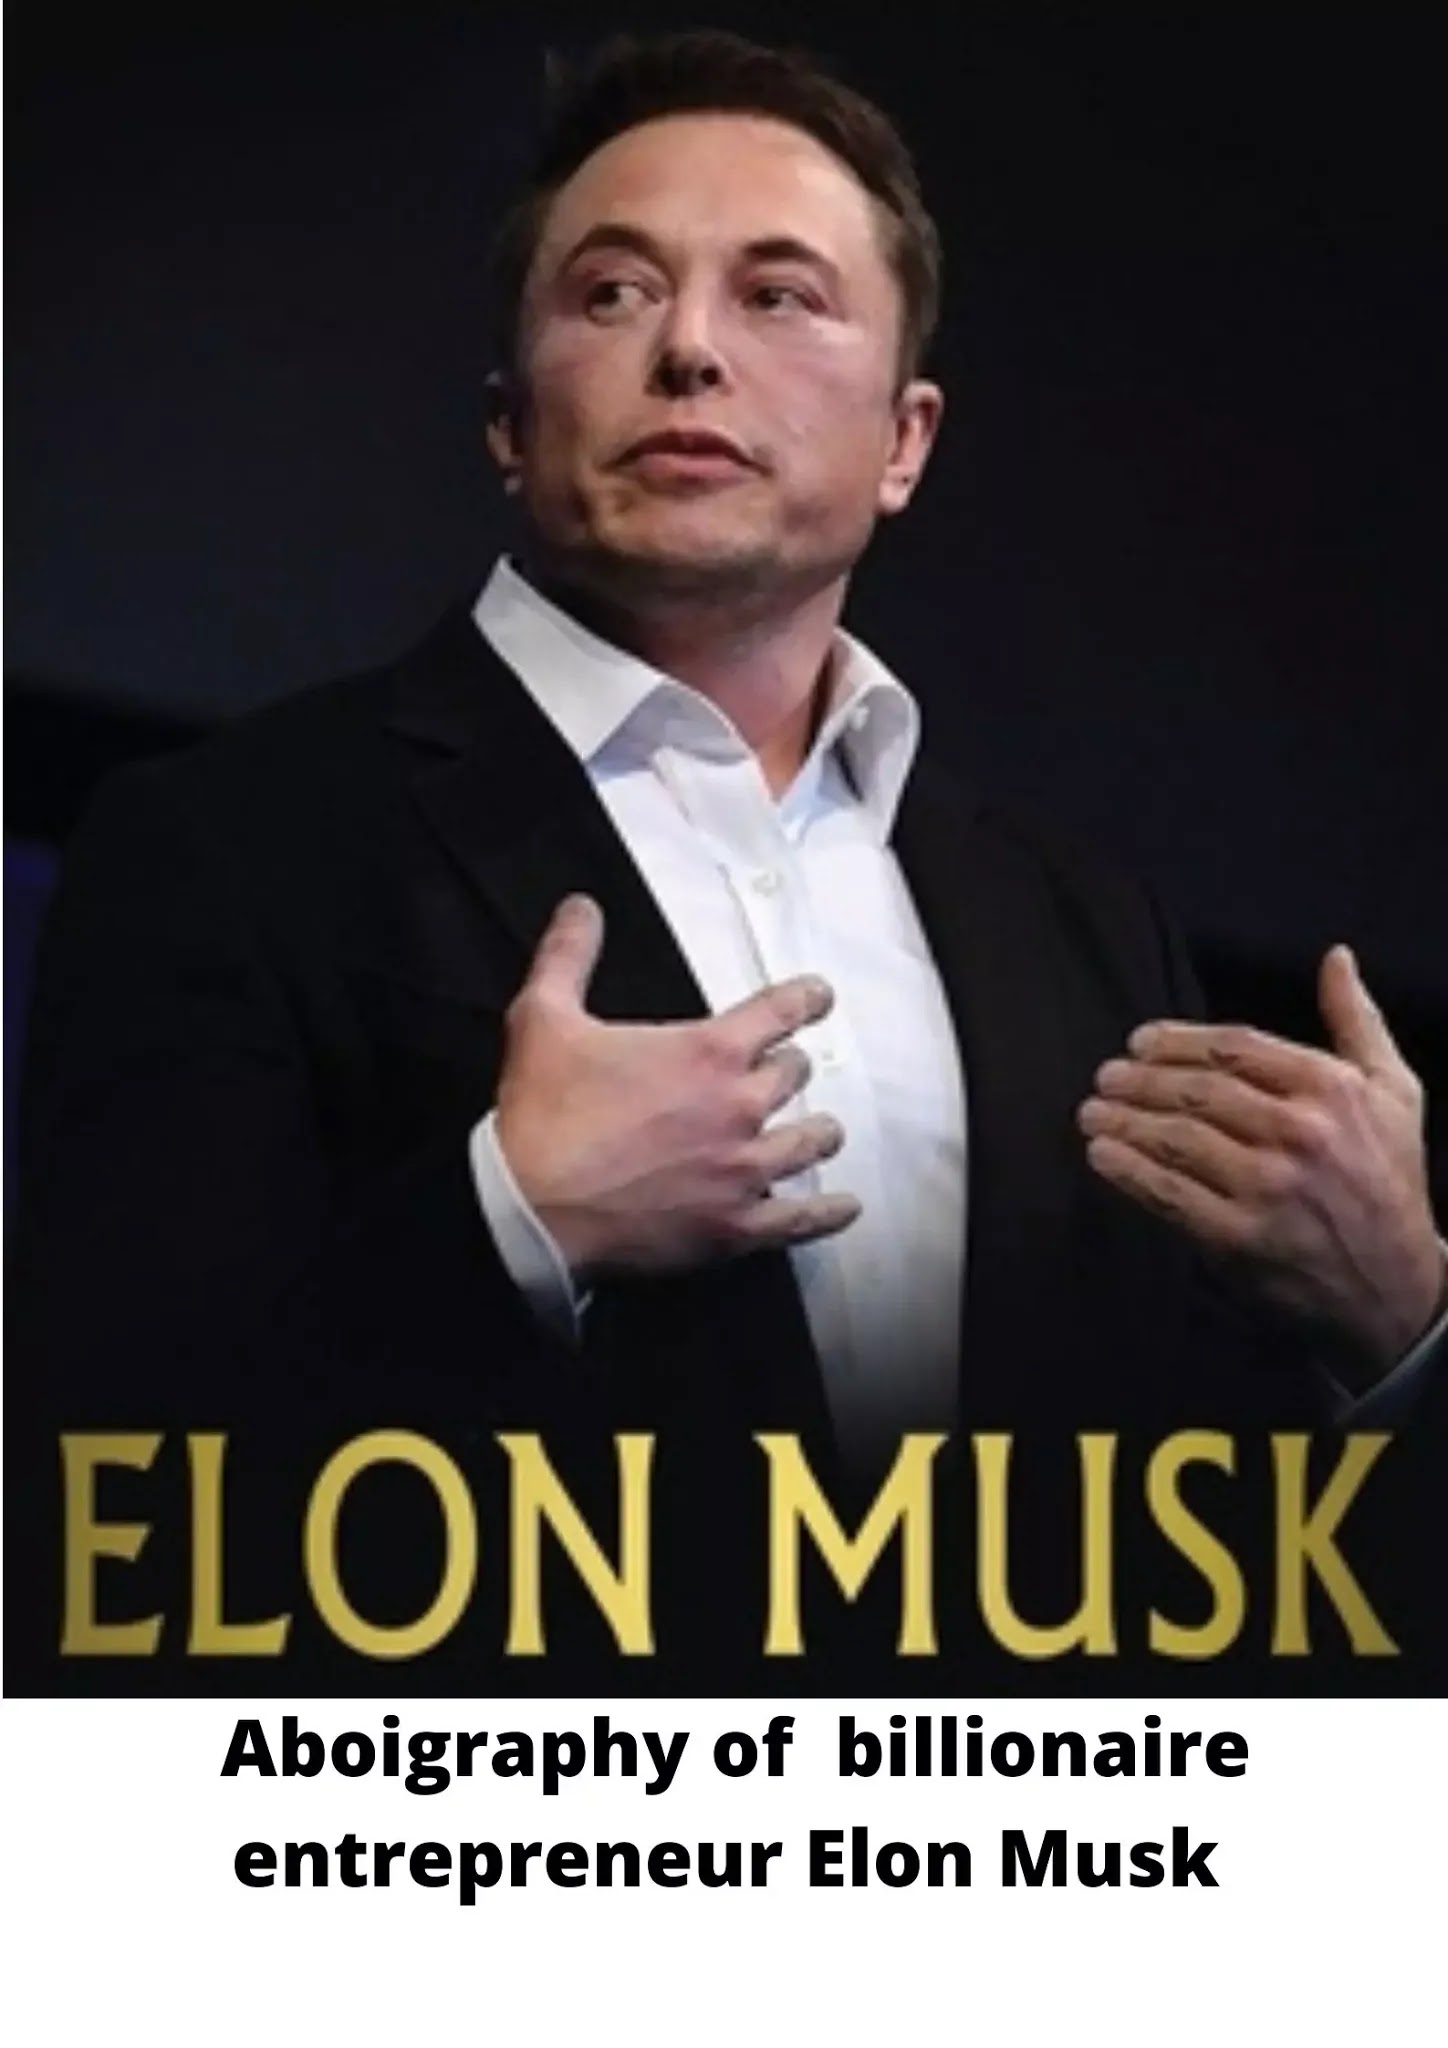 Elon Musk A Biography of Billionaire Entrepreneur | BOOK INFORMATION